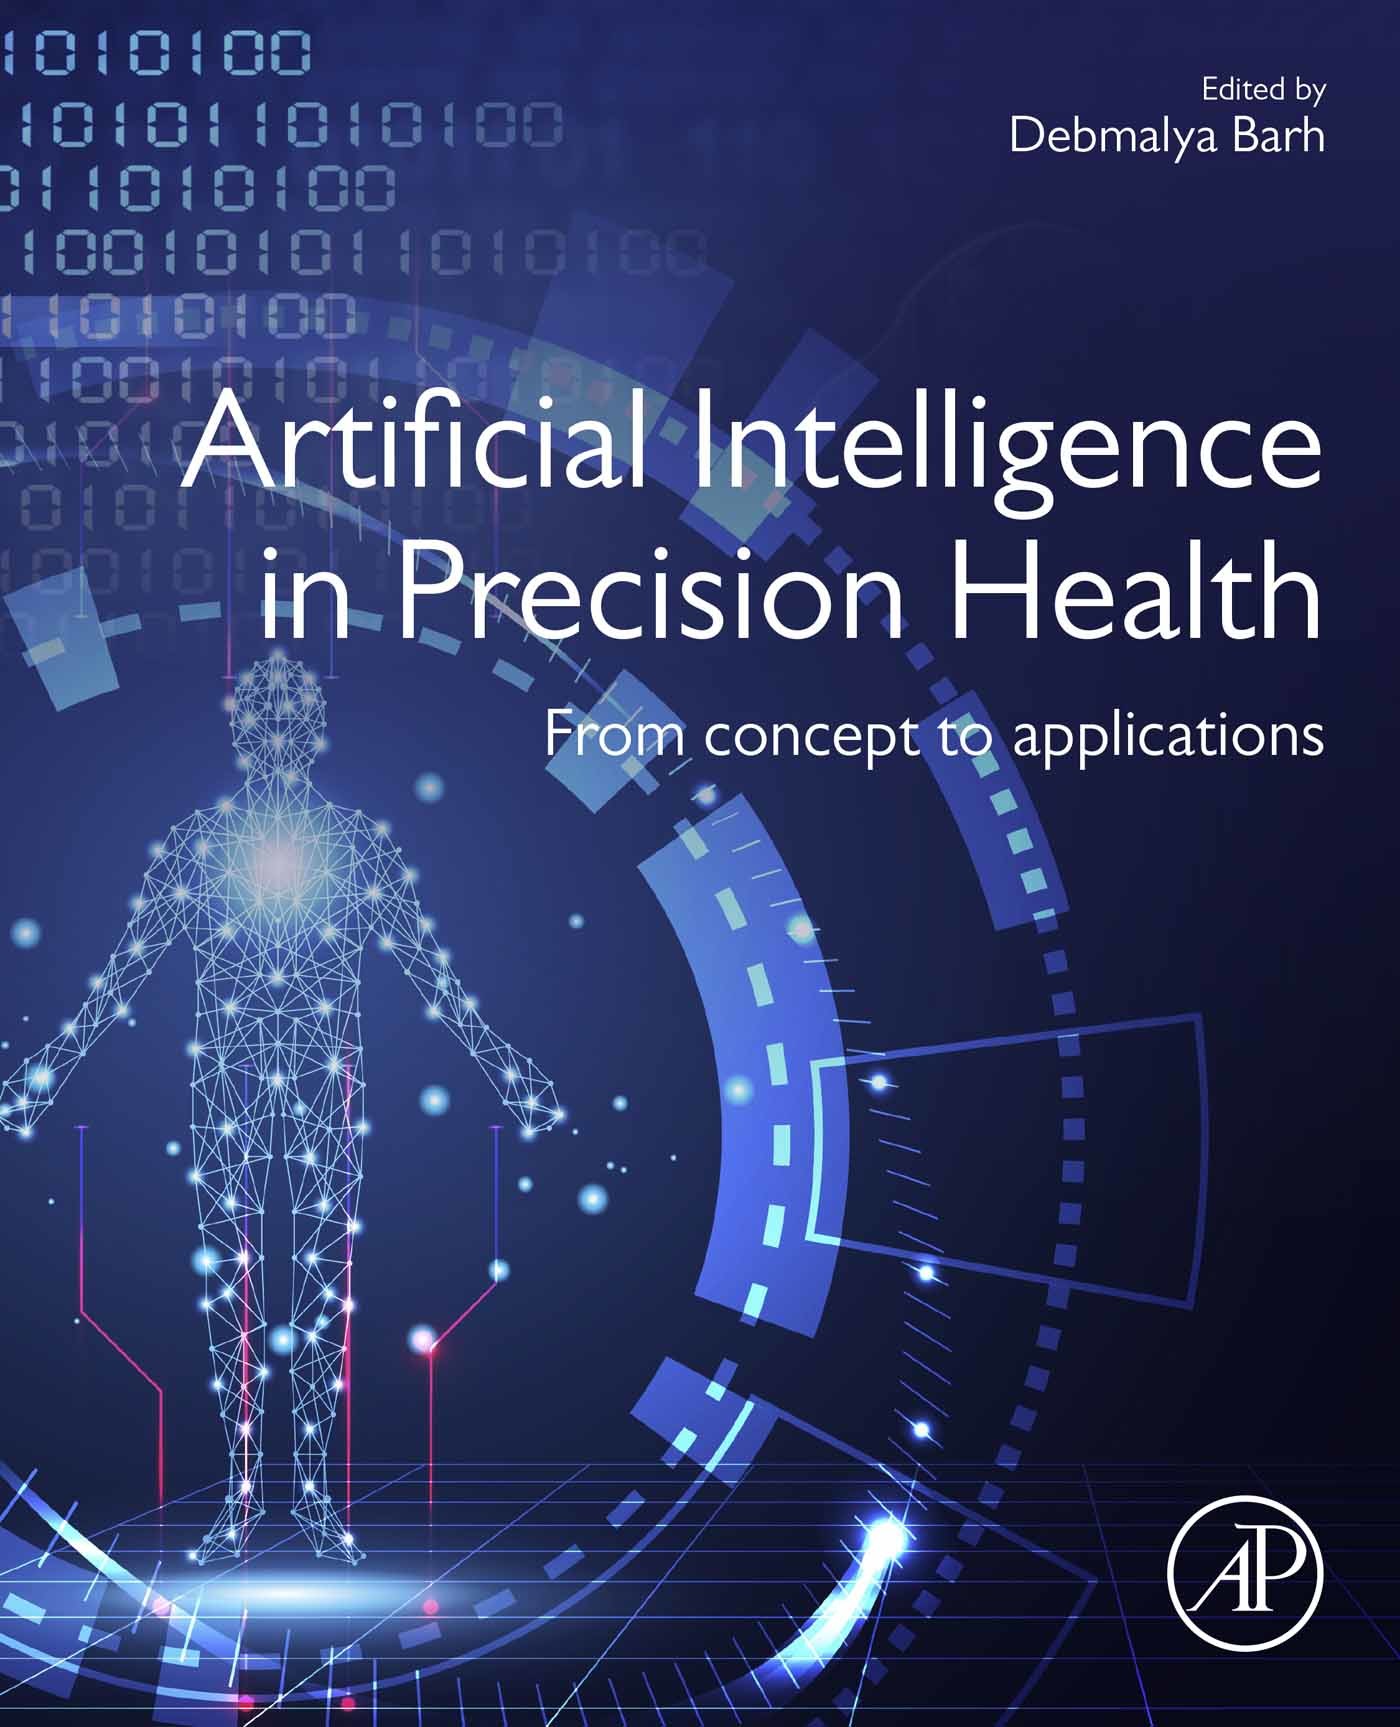 Artificial Intelligence in Precision Health